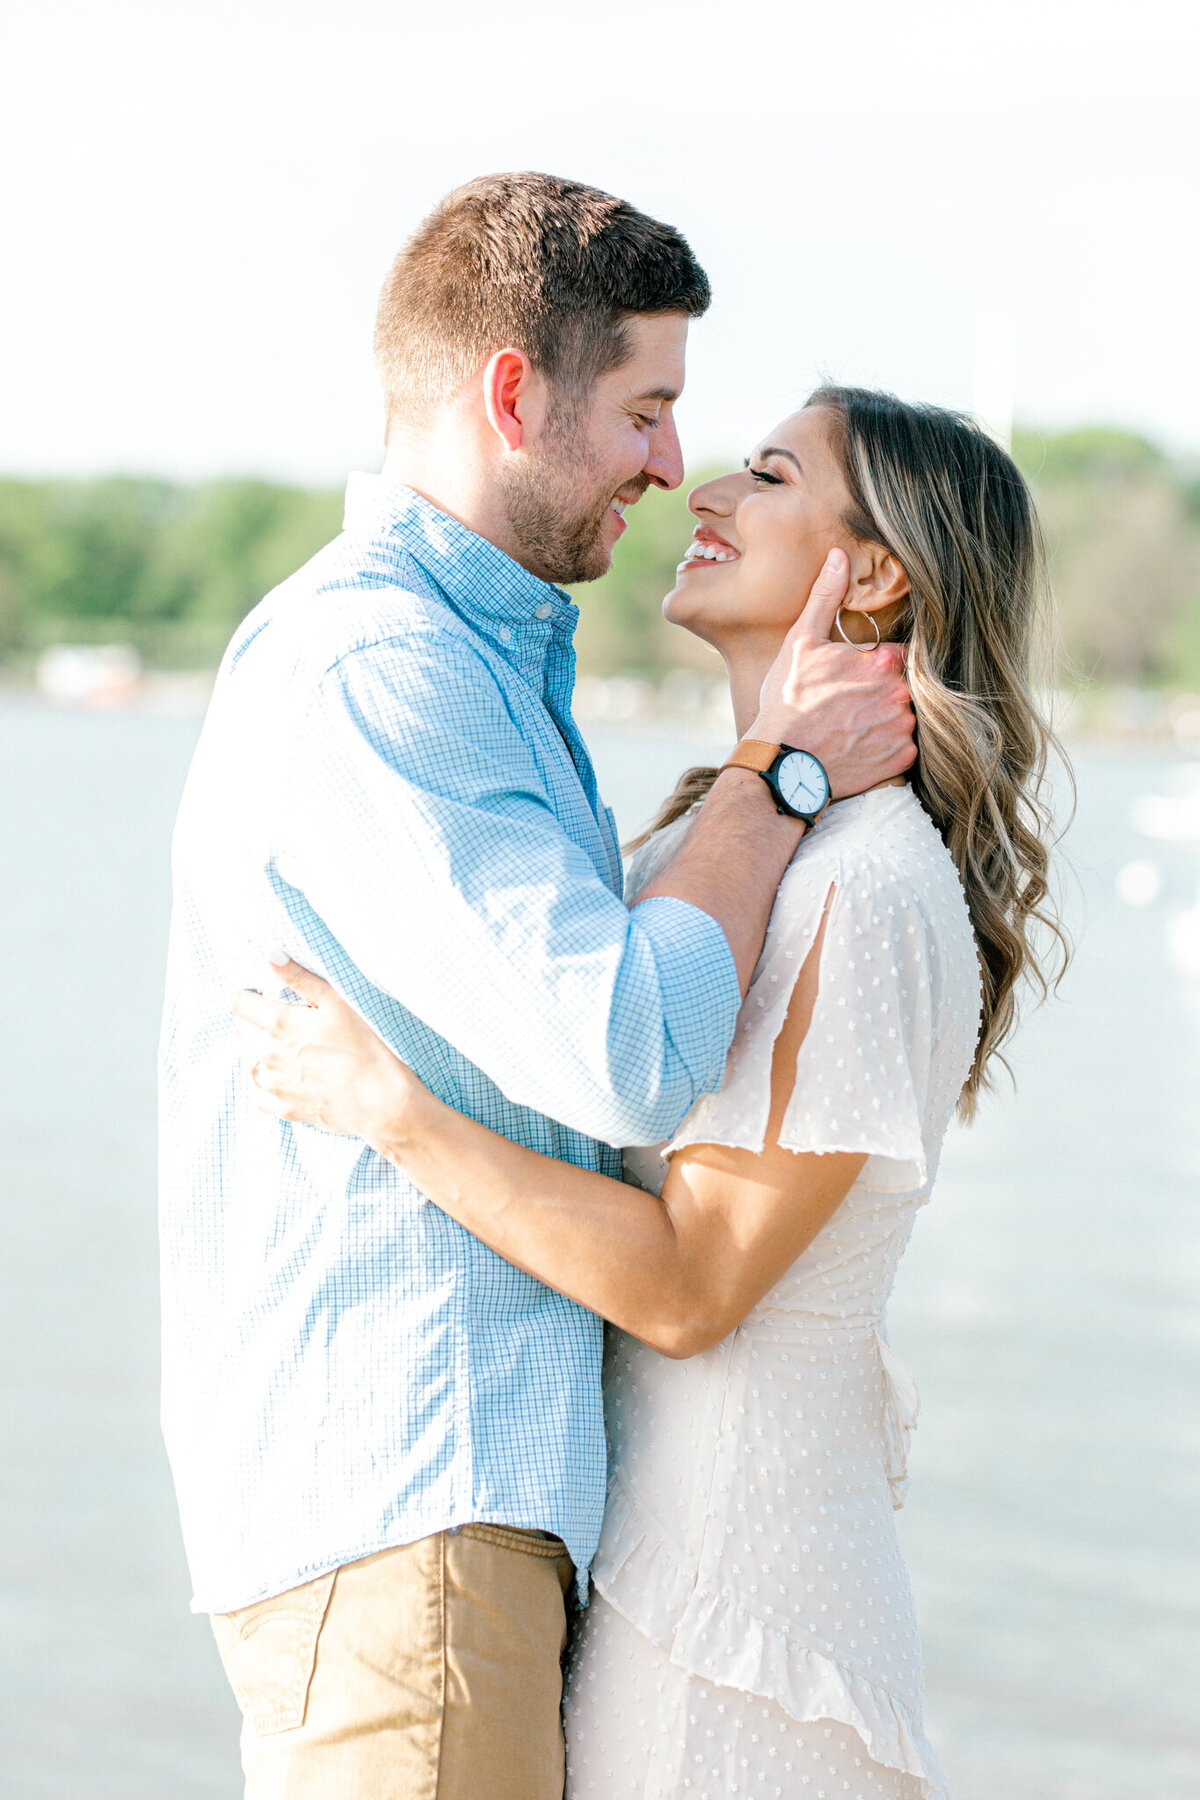 Anna & Brendan White Rock Lake Engagement Session | Dallas Wedding Photographer | Sami Kathryn Photography-11